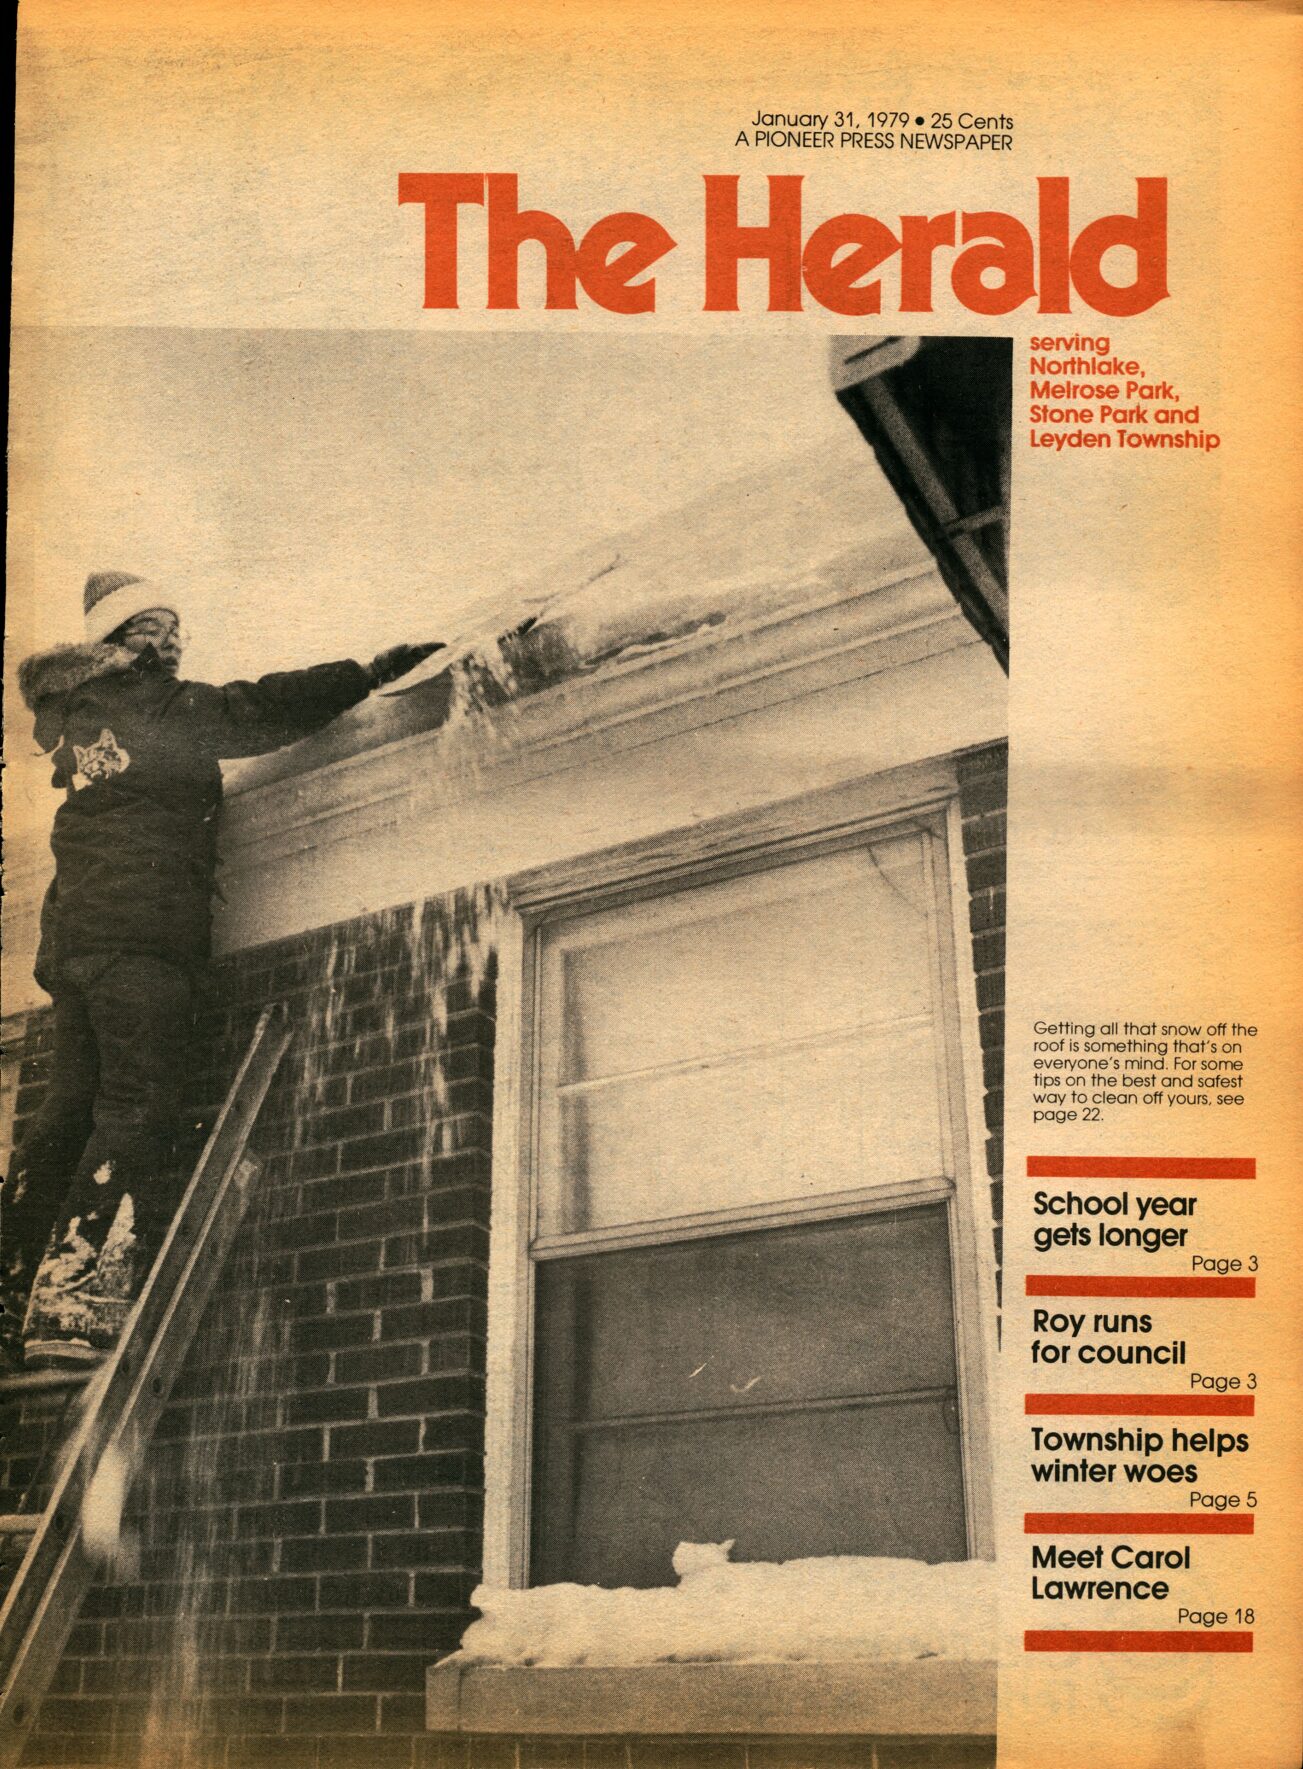 The Herald – 19790131